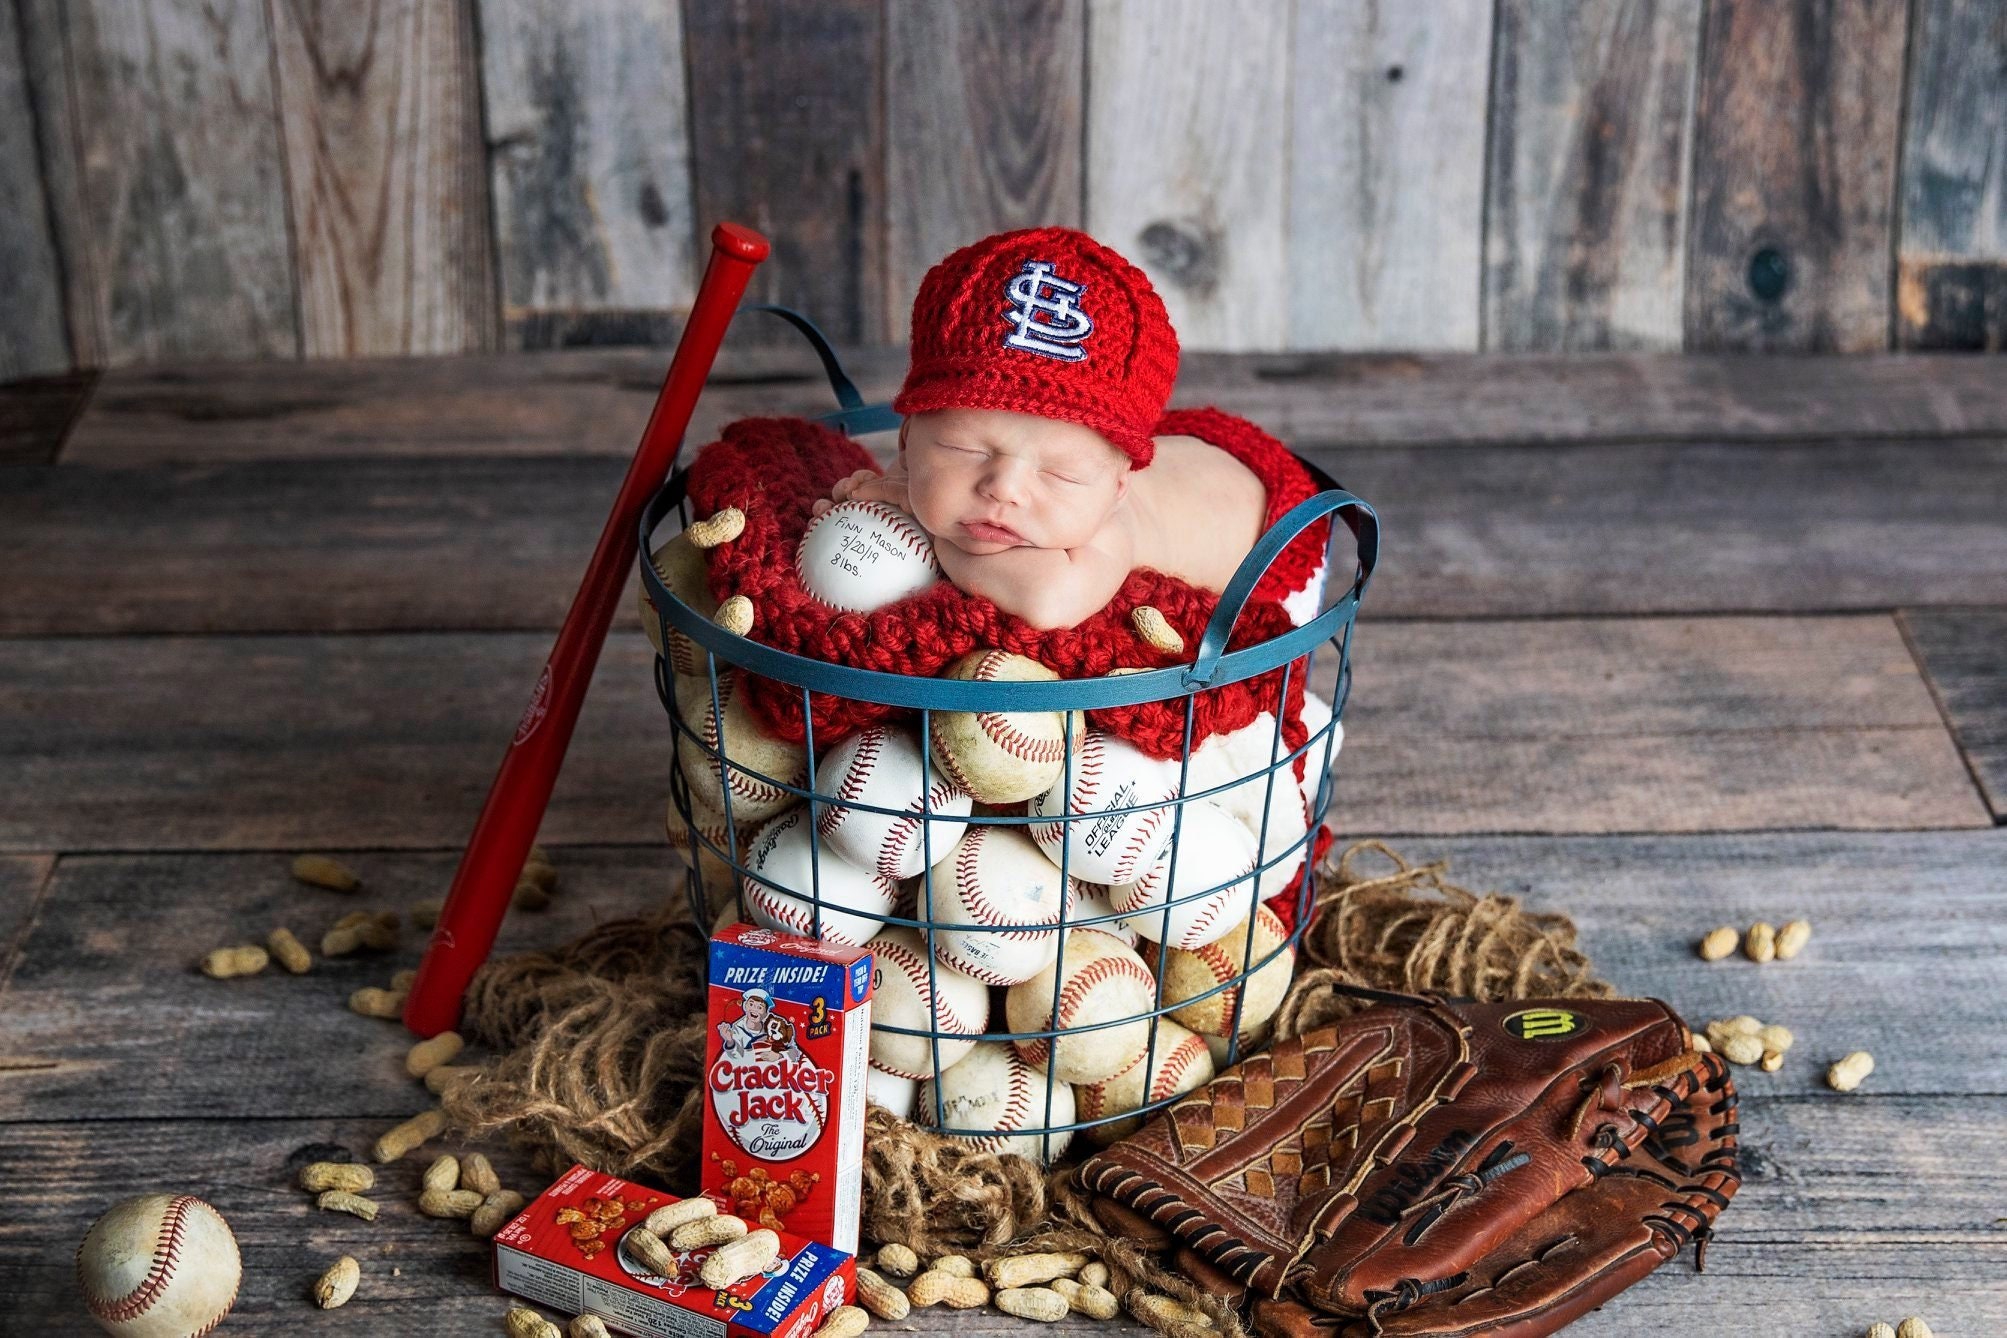 GoldenGirlzHandmade Baby Girl St. Louis Cardinals Cap Hat Outfit Hand Knit Knitted Crochet Baby Gift Newborn Photo Photography Prop Baseball MLB Handmade Infant